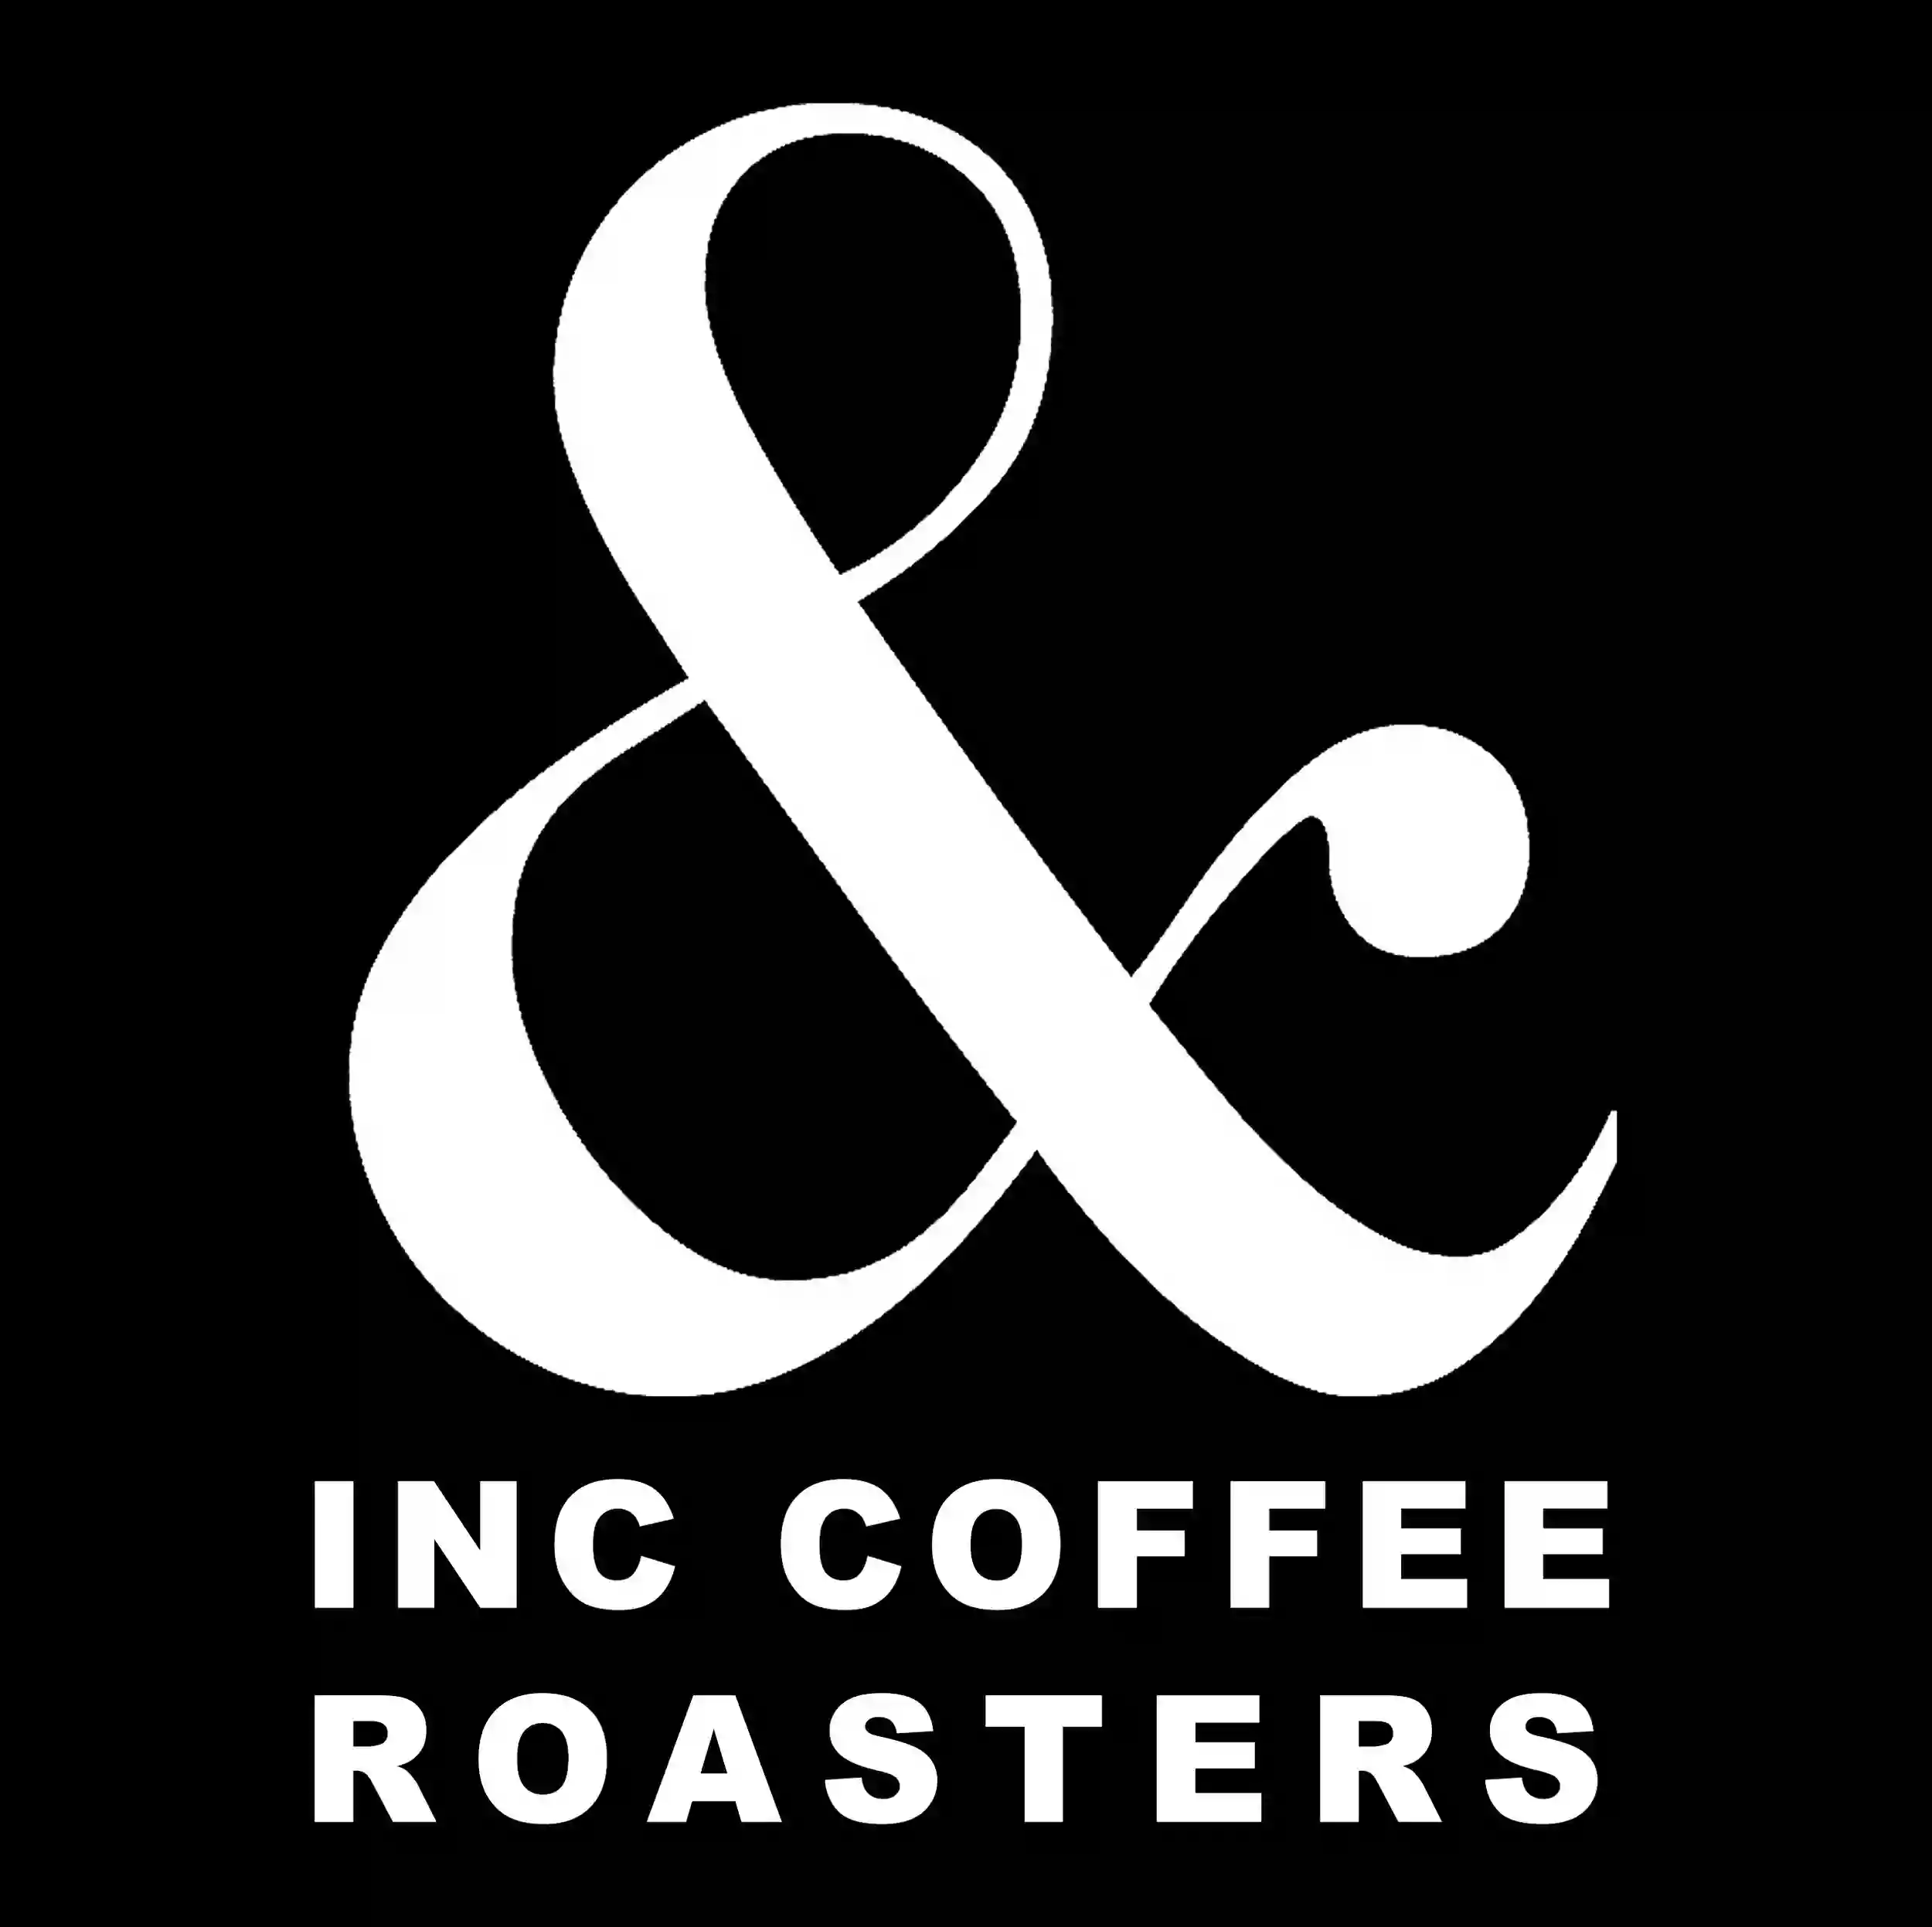 INC Coffee Roasters